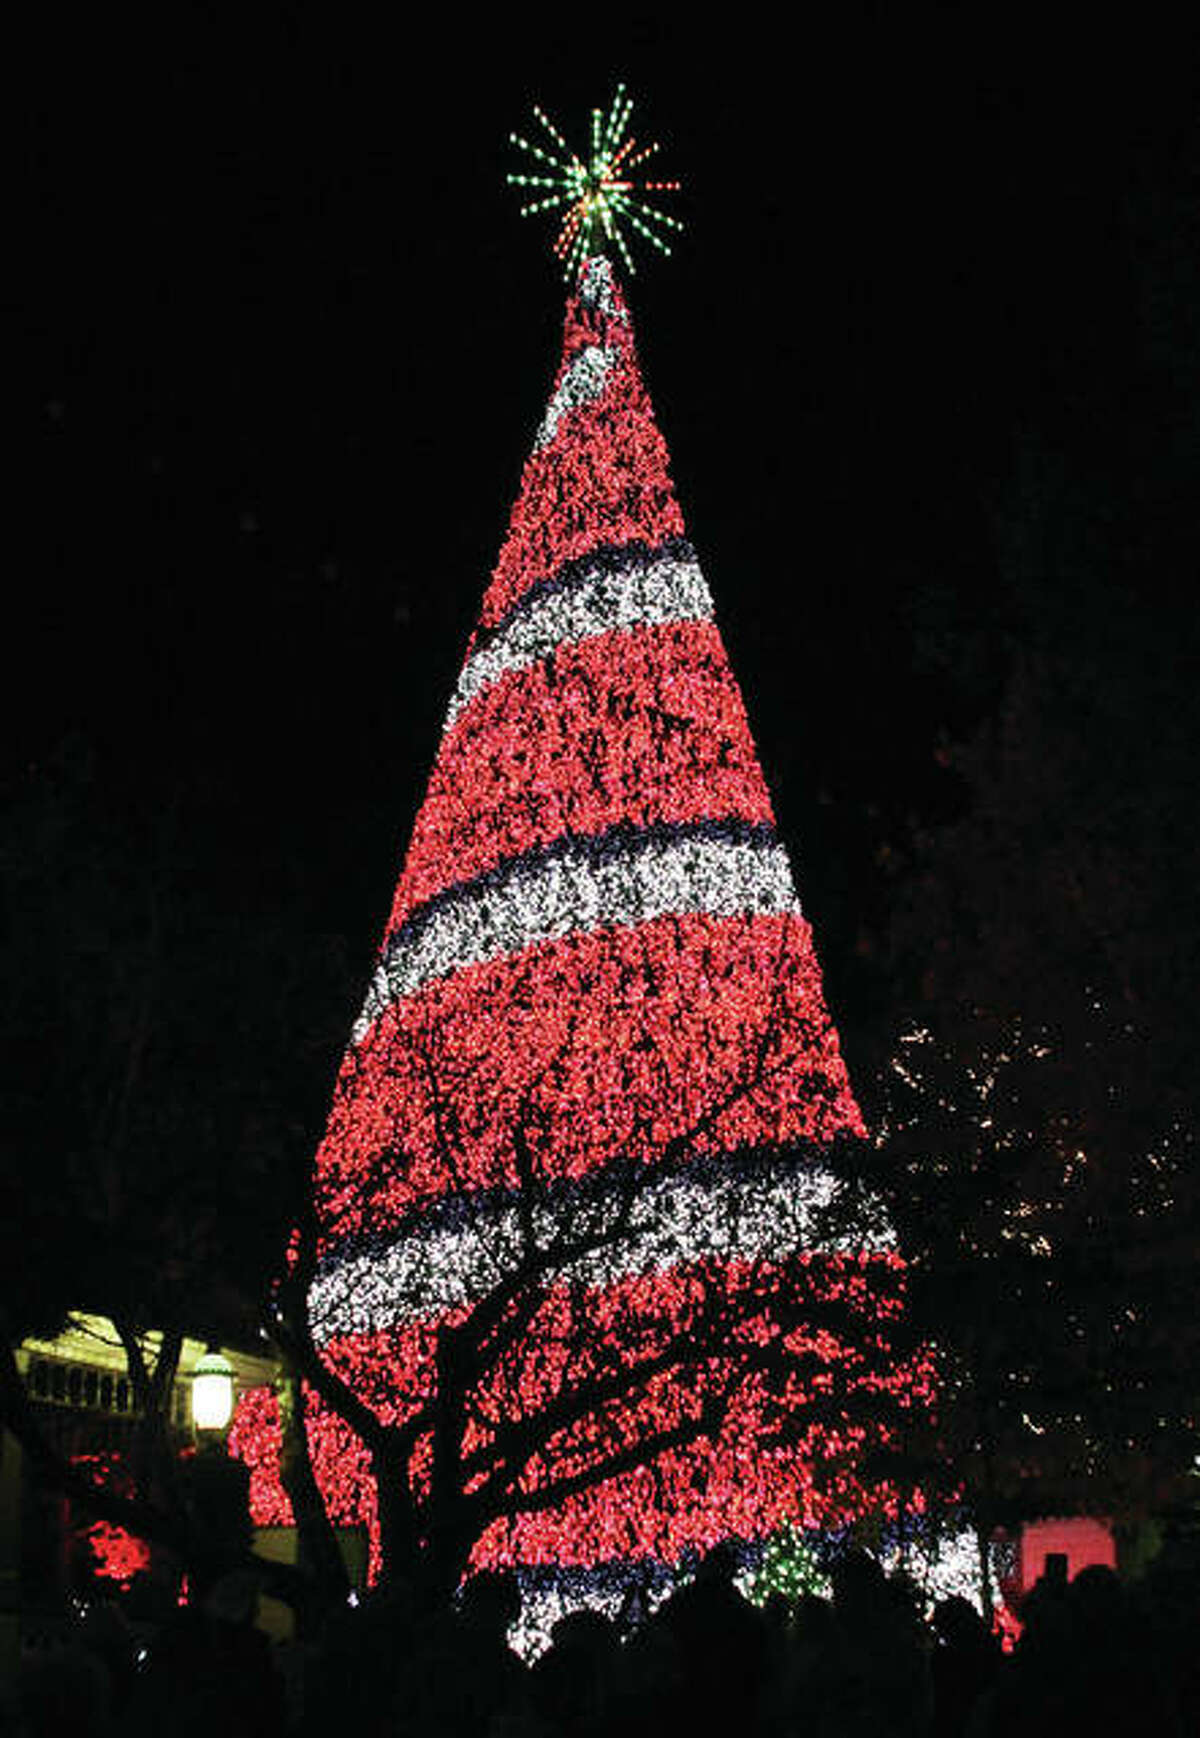 Silver Dollar City’s new 8story, lighted tree highlights Christmas season